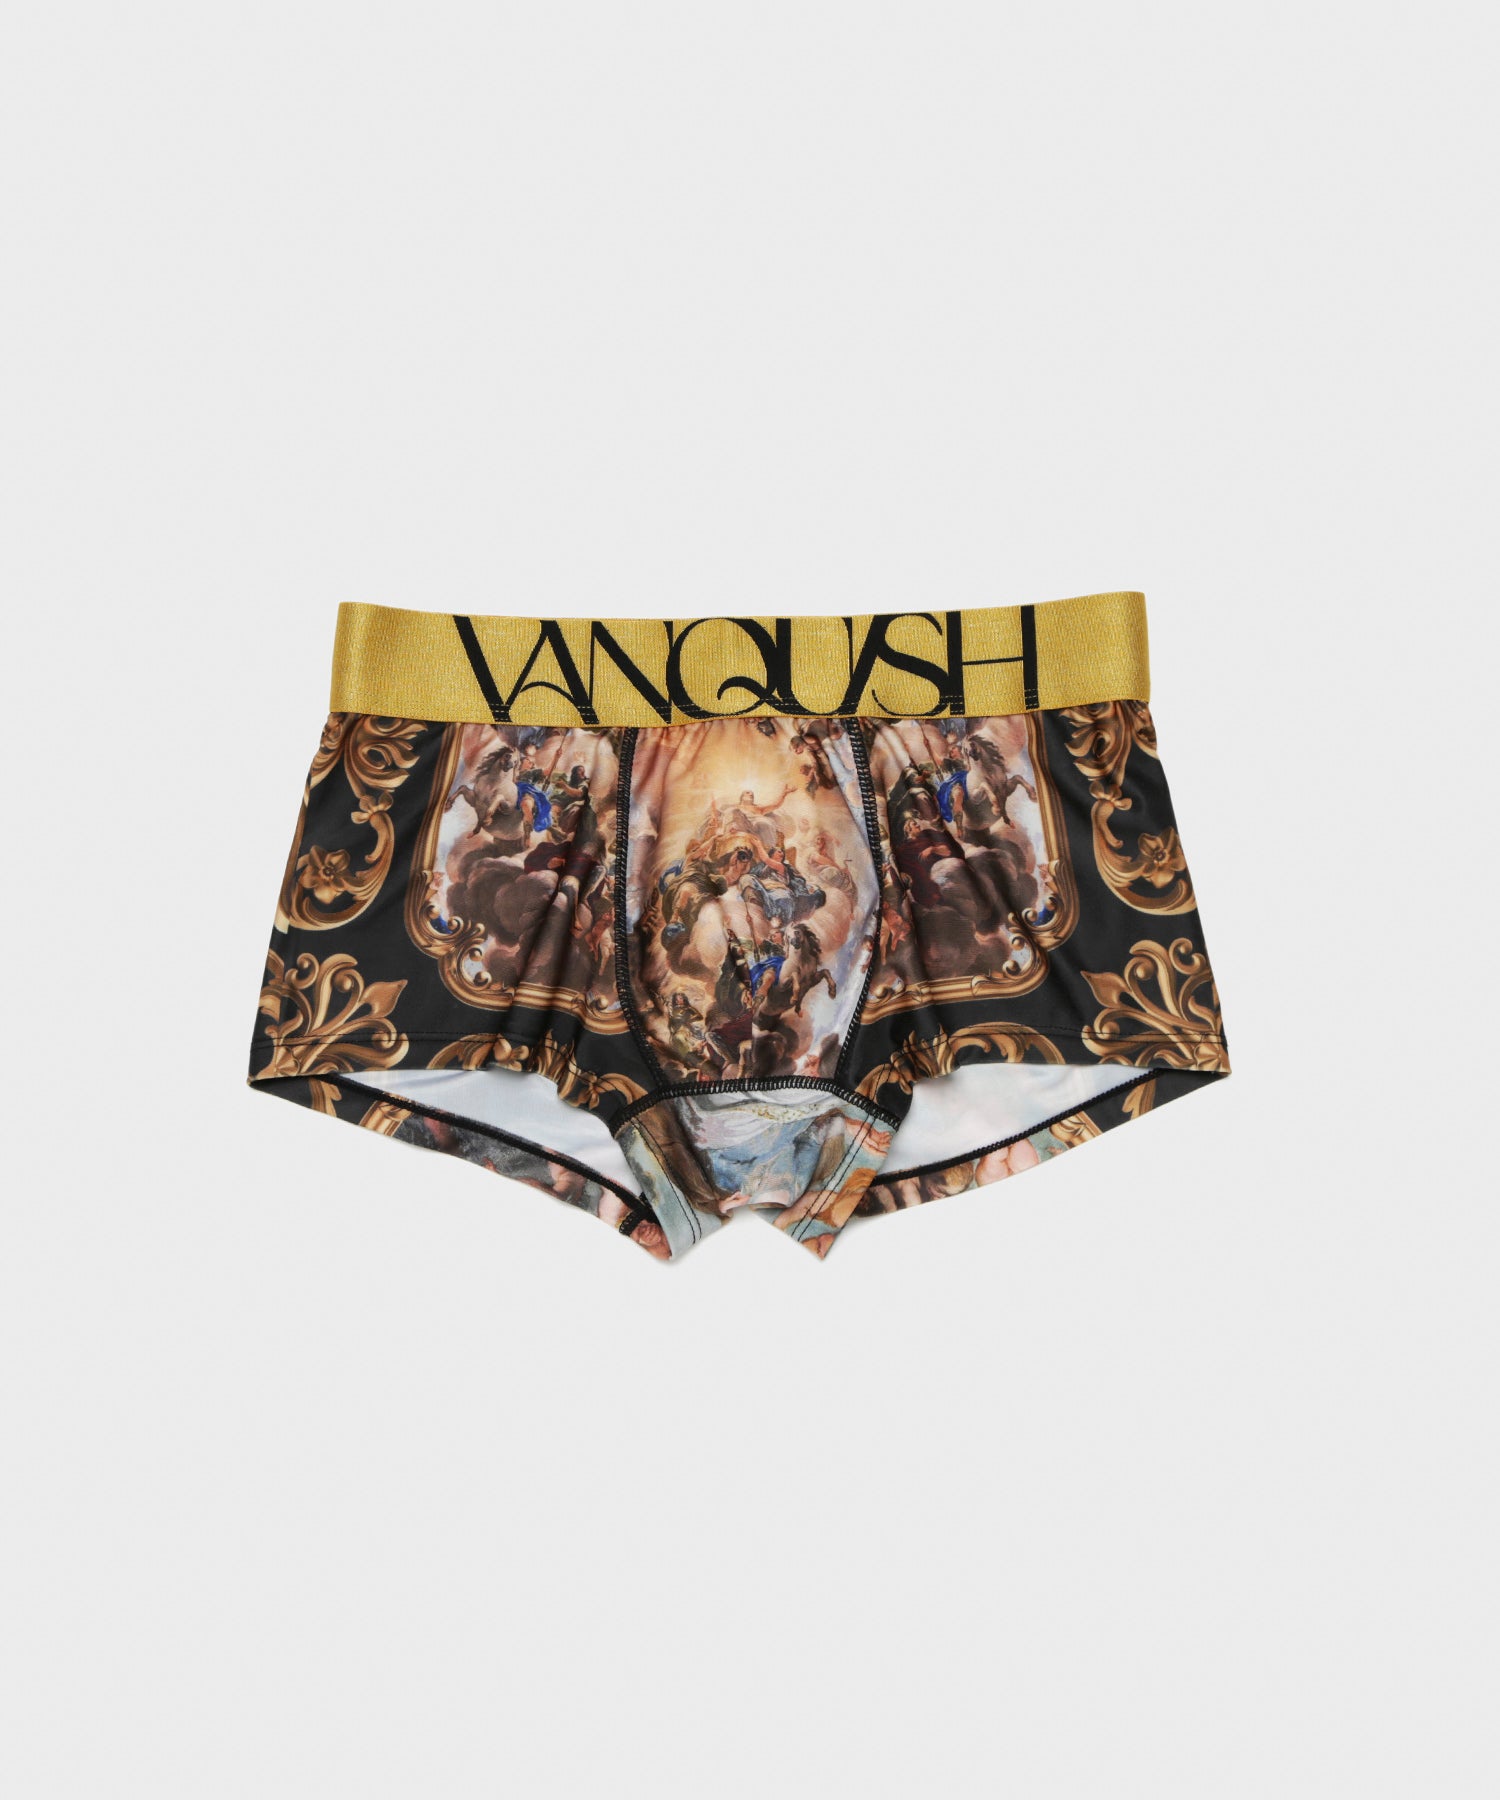 Baroque Art Oil Painting Underwear[VUW154]